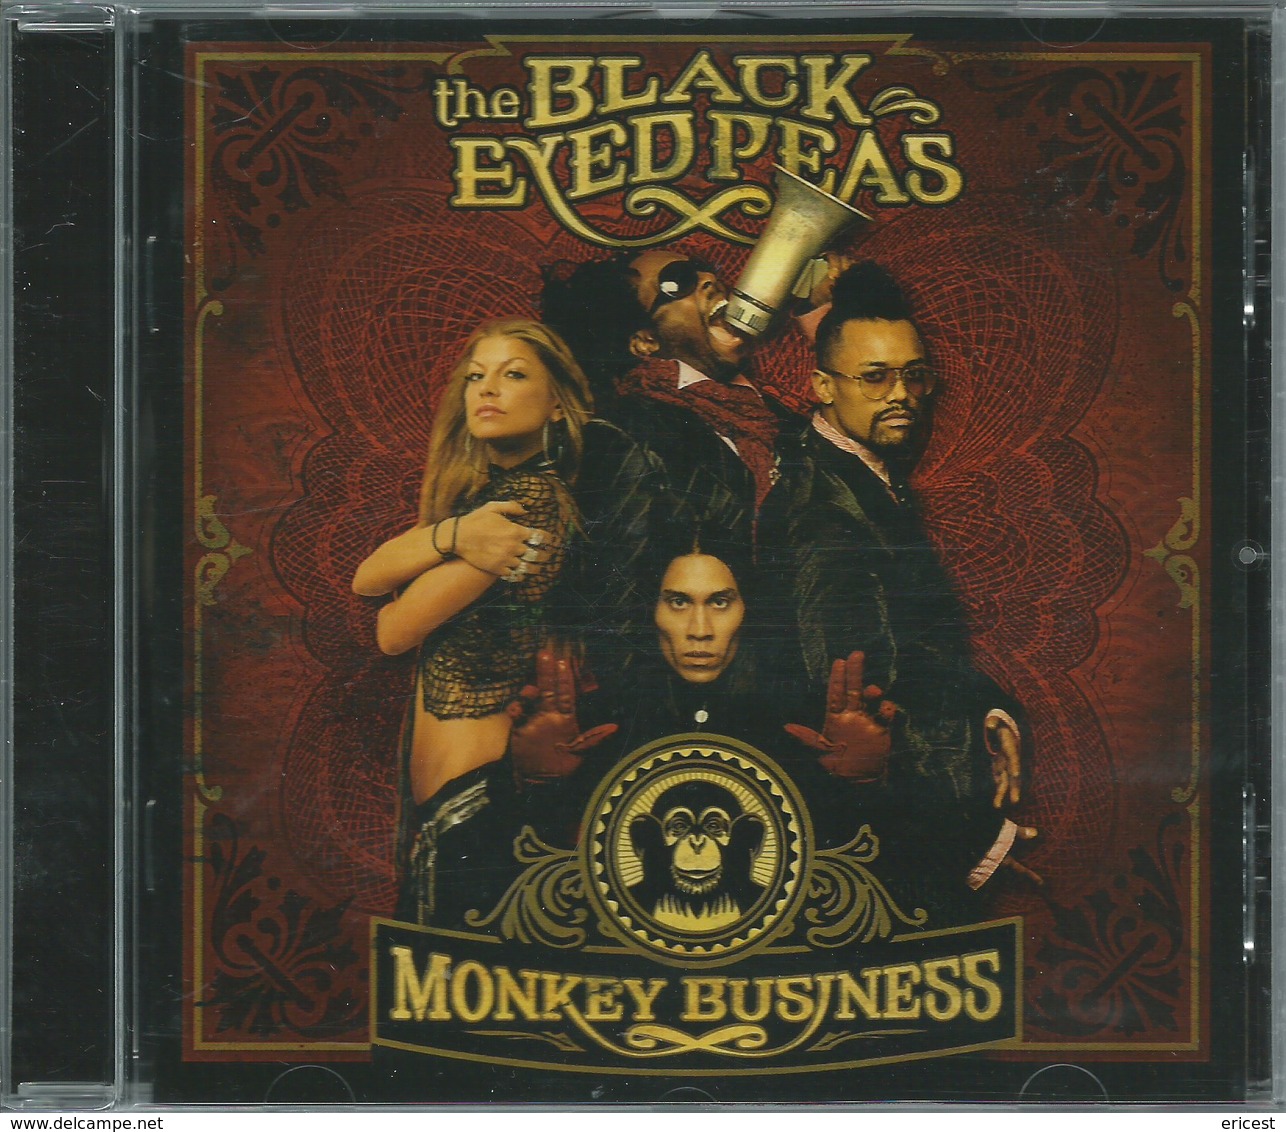 - CD THE BLACK EYEDPEAS MONKEY BUSINESS - Soul - R&B